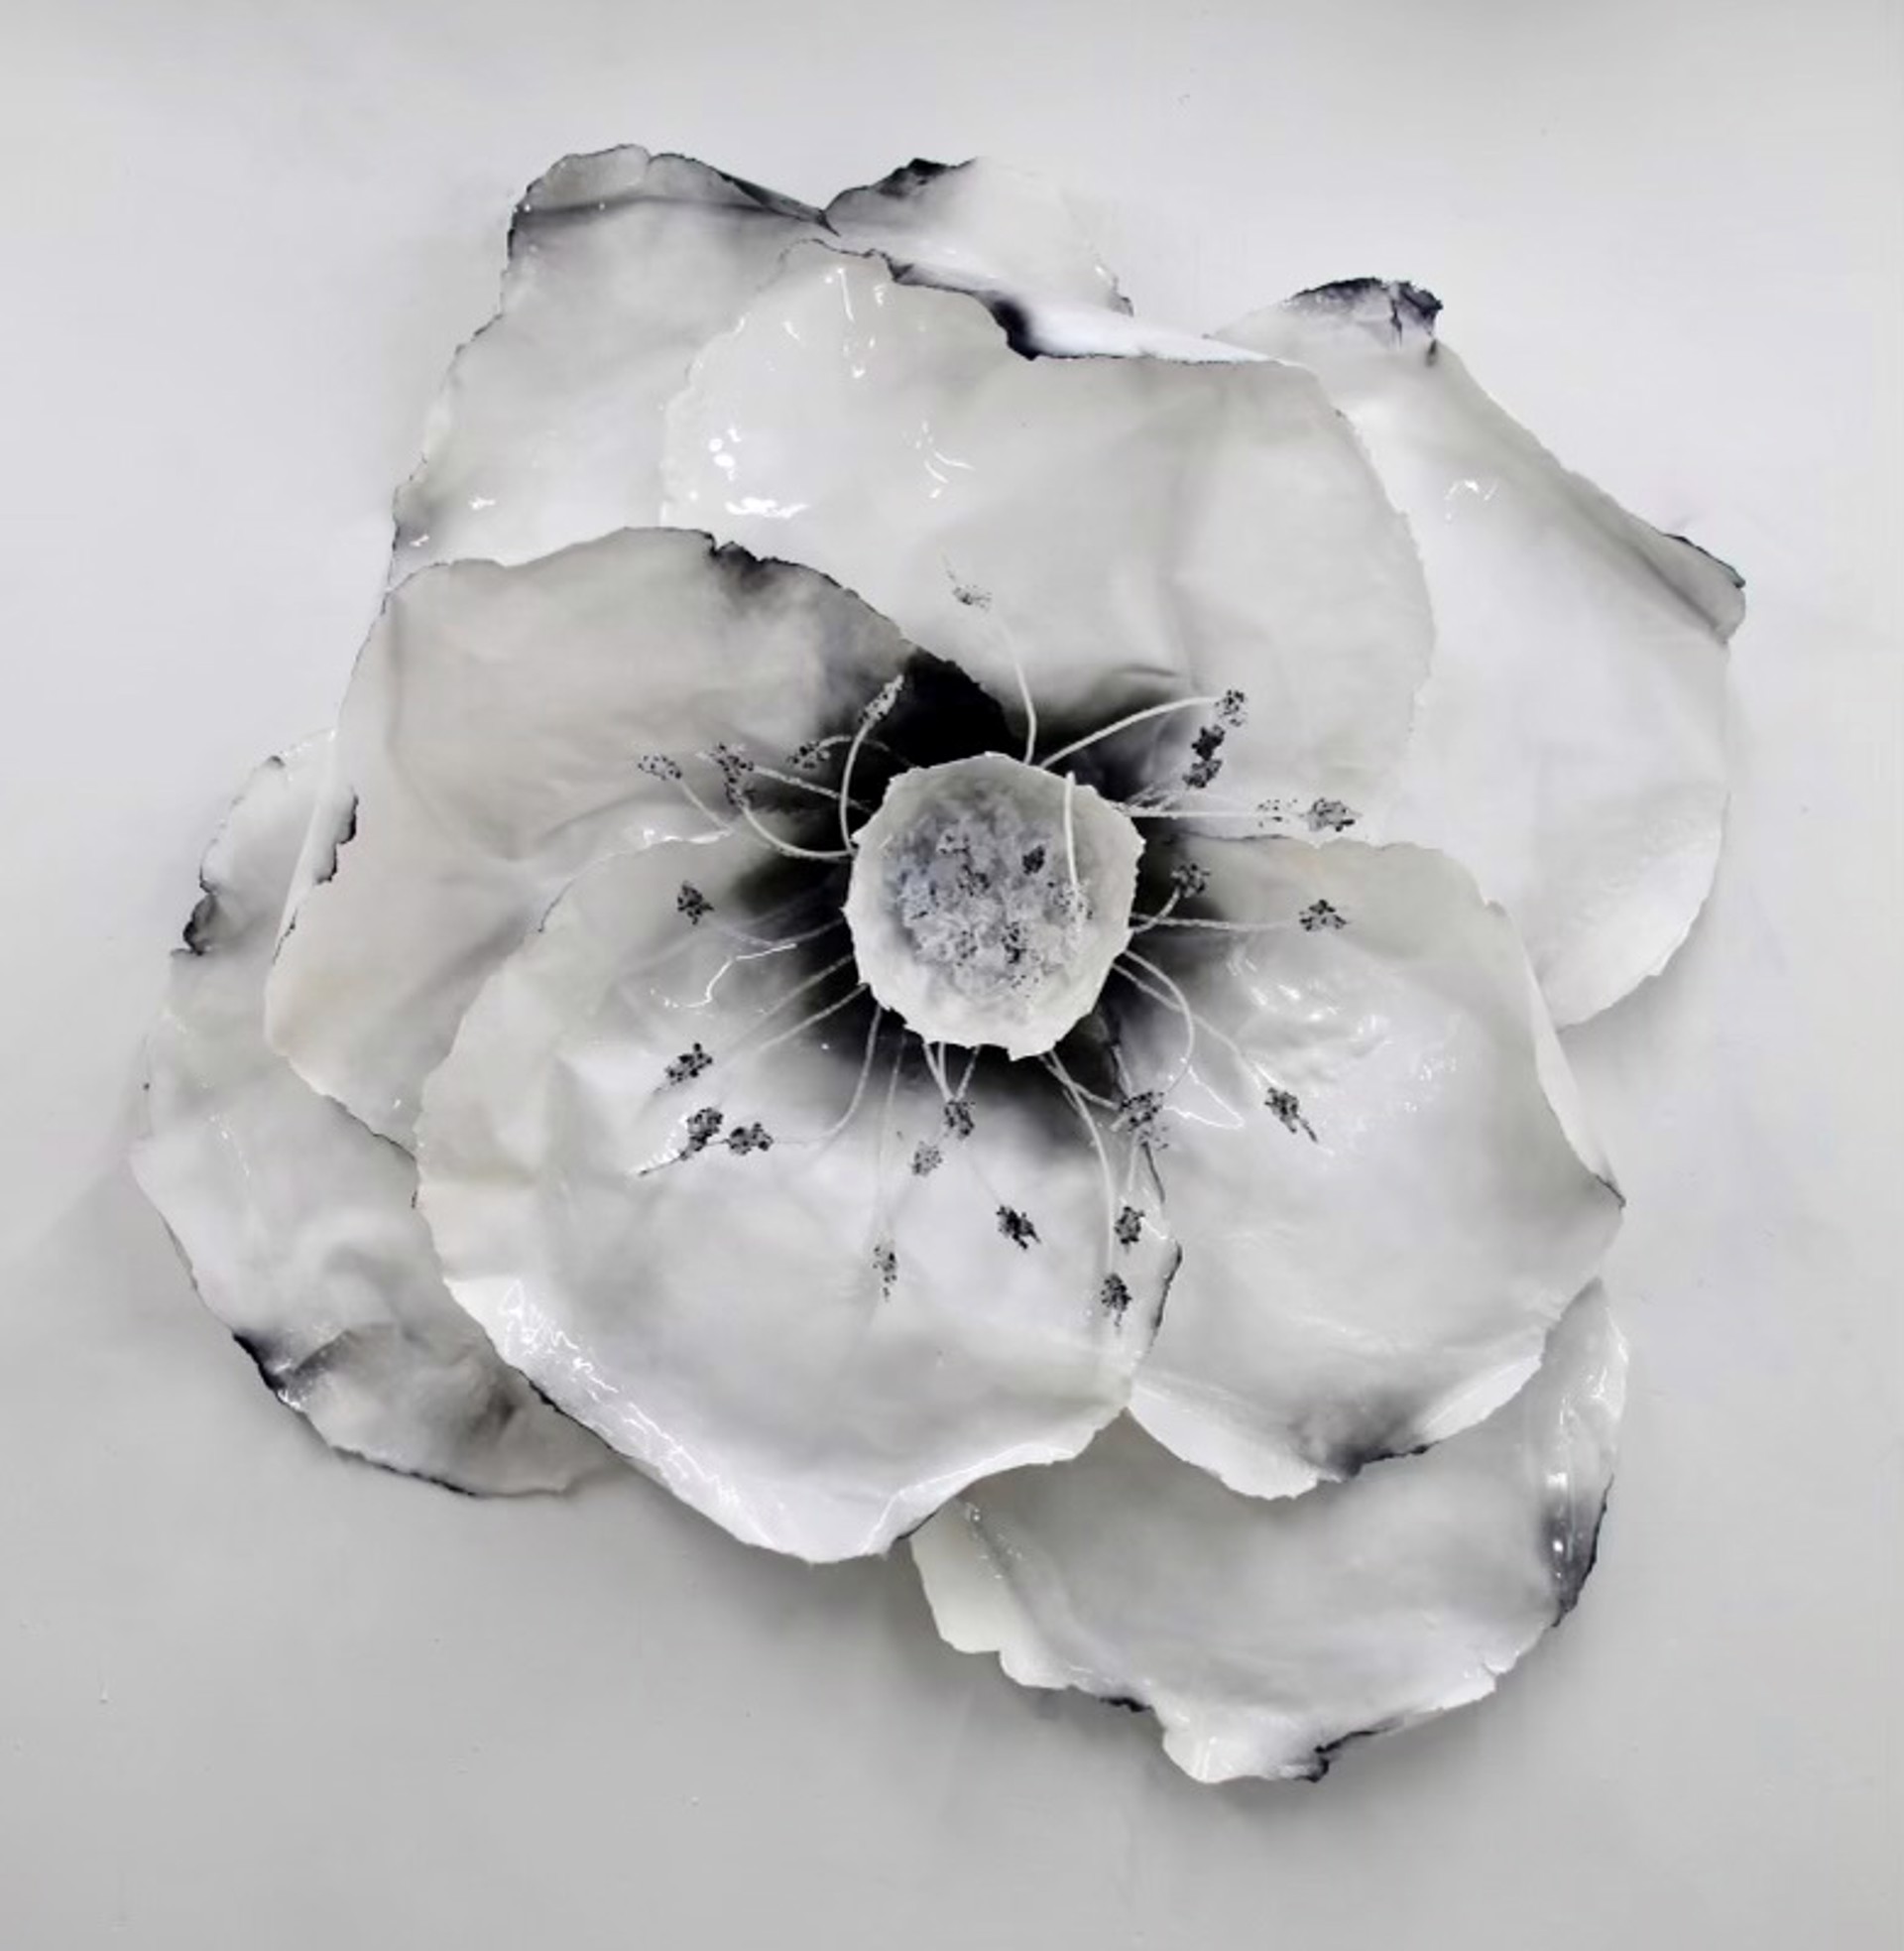 Black and White Commission by Julia Alejandra Gentile